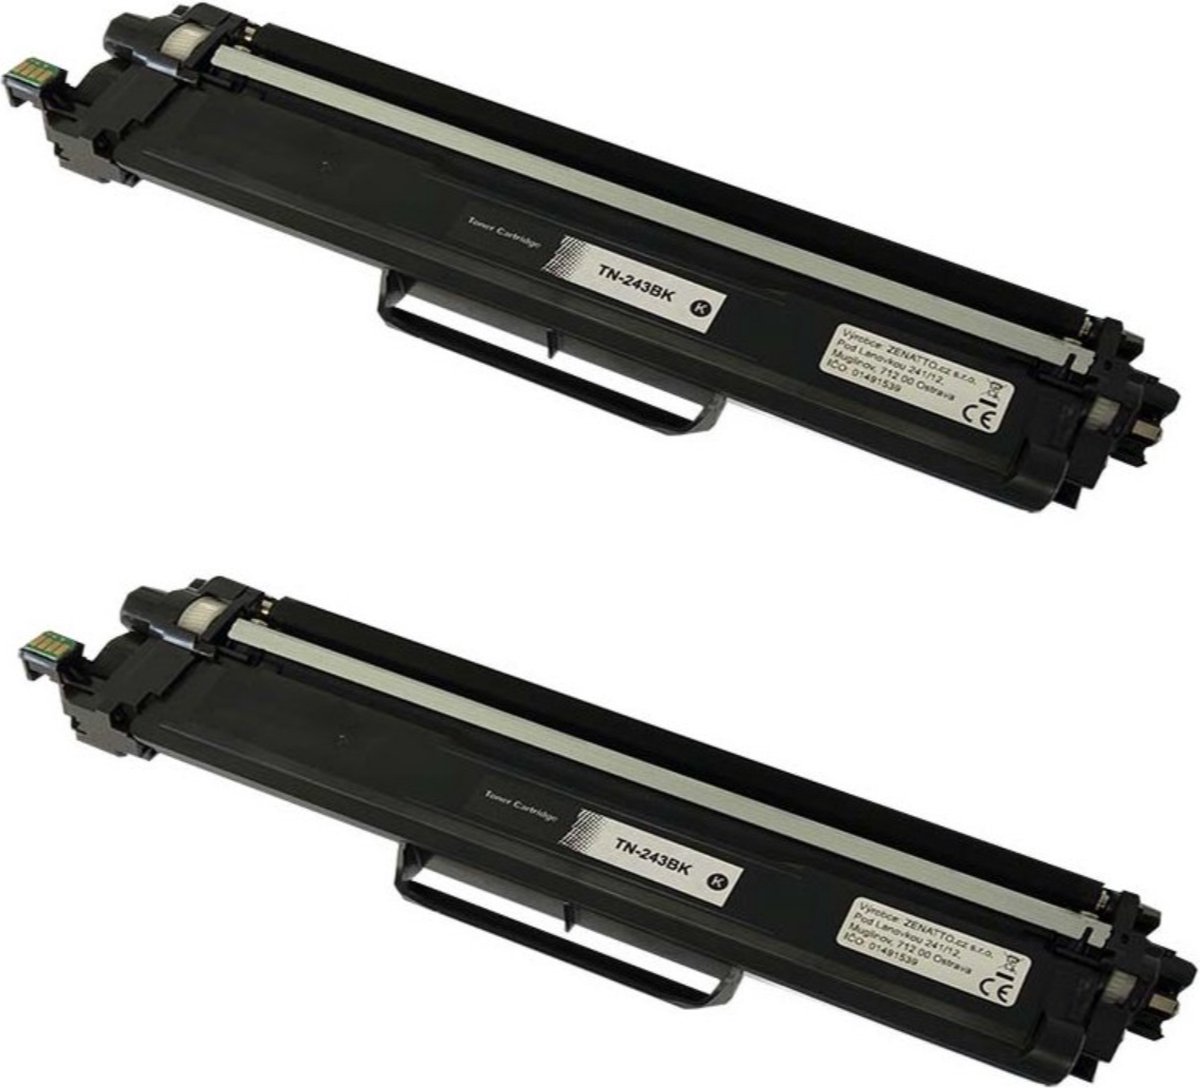 Cartouches de toner laser INKTDL XL Multipack pour Brother TN-243K